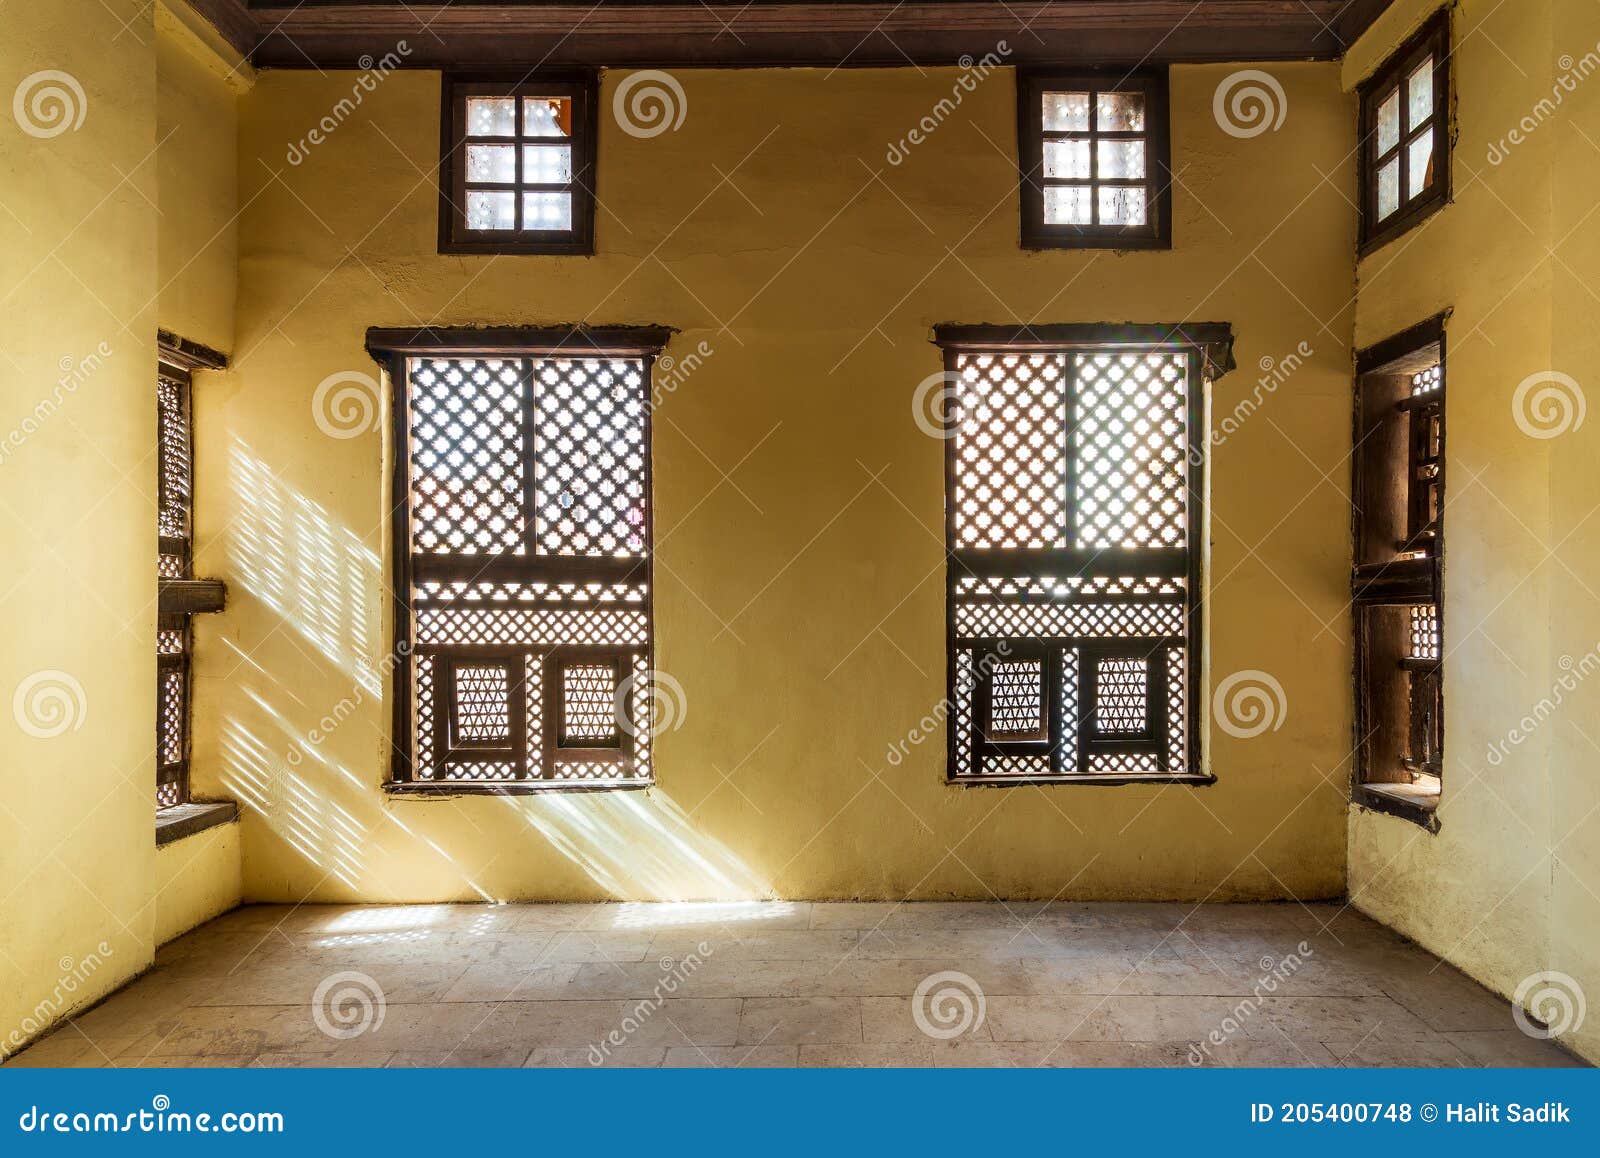 facade of two interleaved wooden ornate windows - mashrabiya - in stone wall